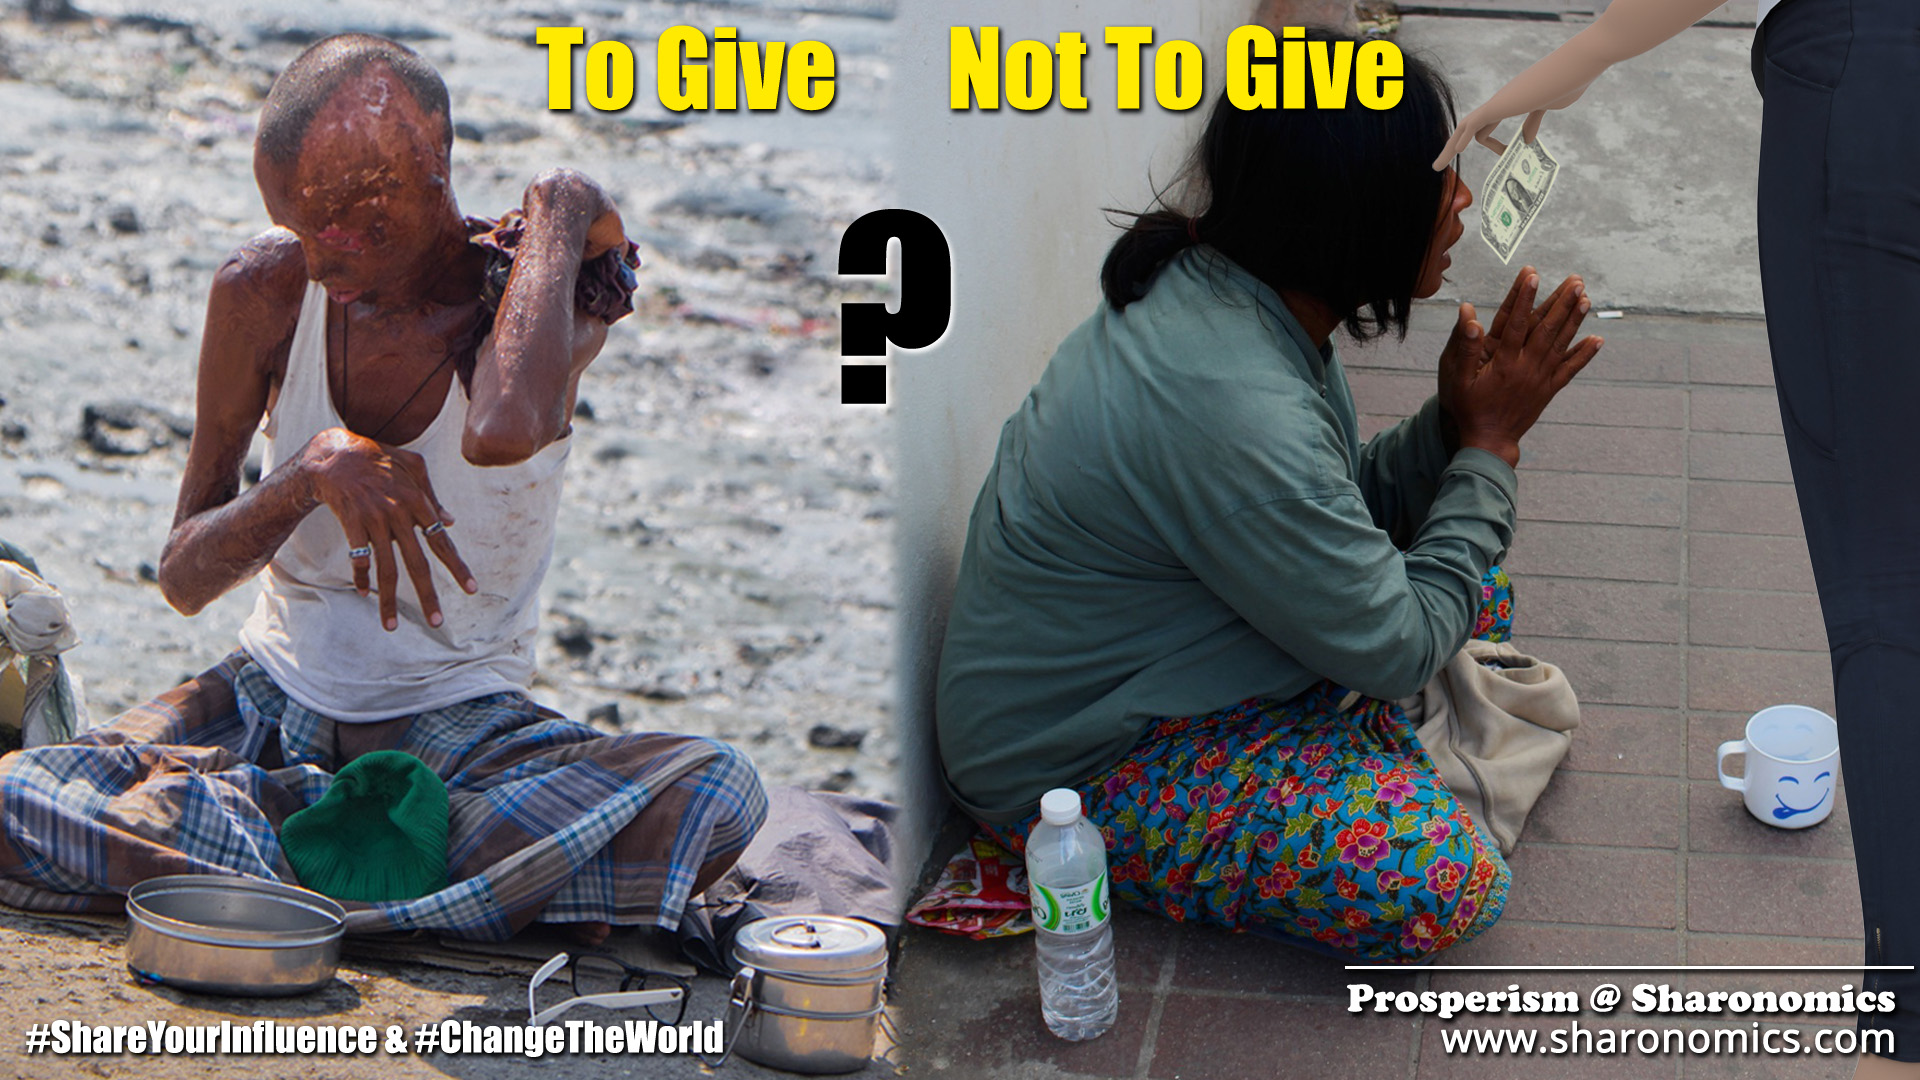 sharonomics, algoshare, prosperism, autonio, poverty, charity, #shareyourinfluence, #changetheworld, give, not give